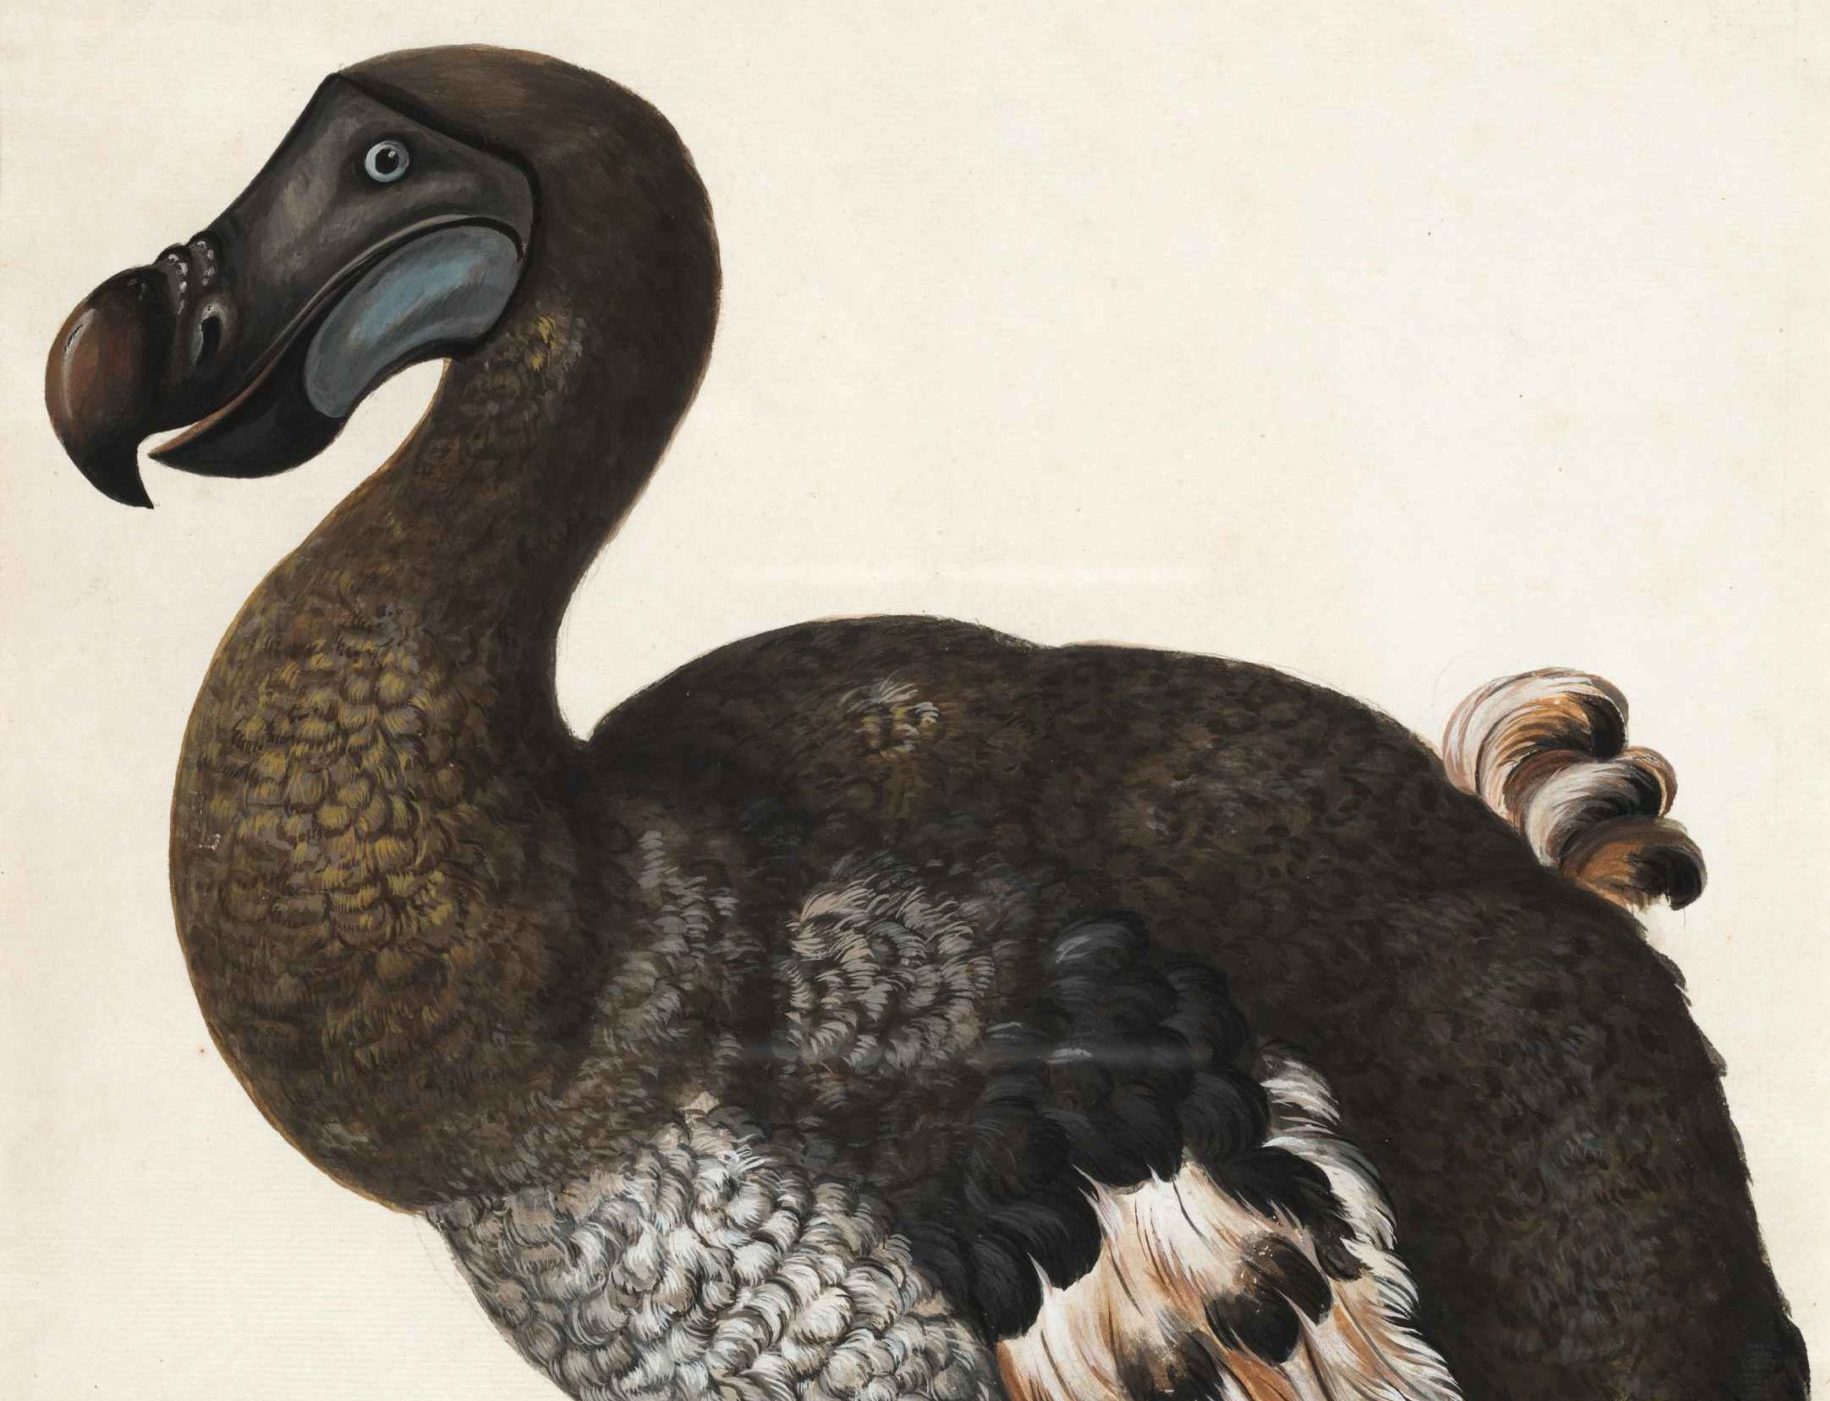 De-extinction project receives 0 million funding to bring back dodo bird